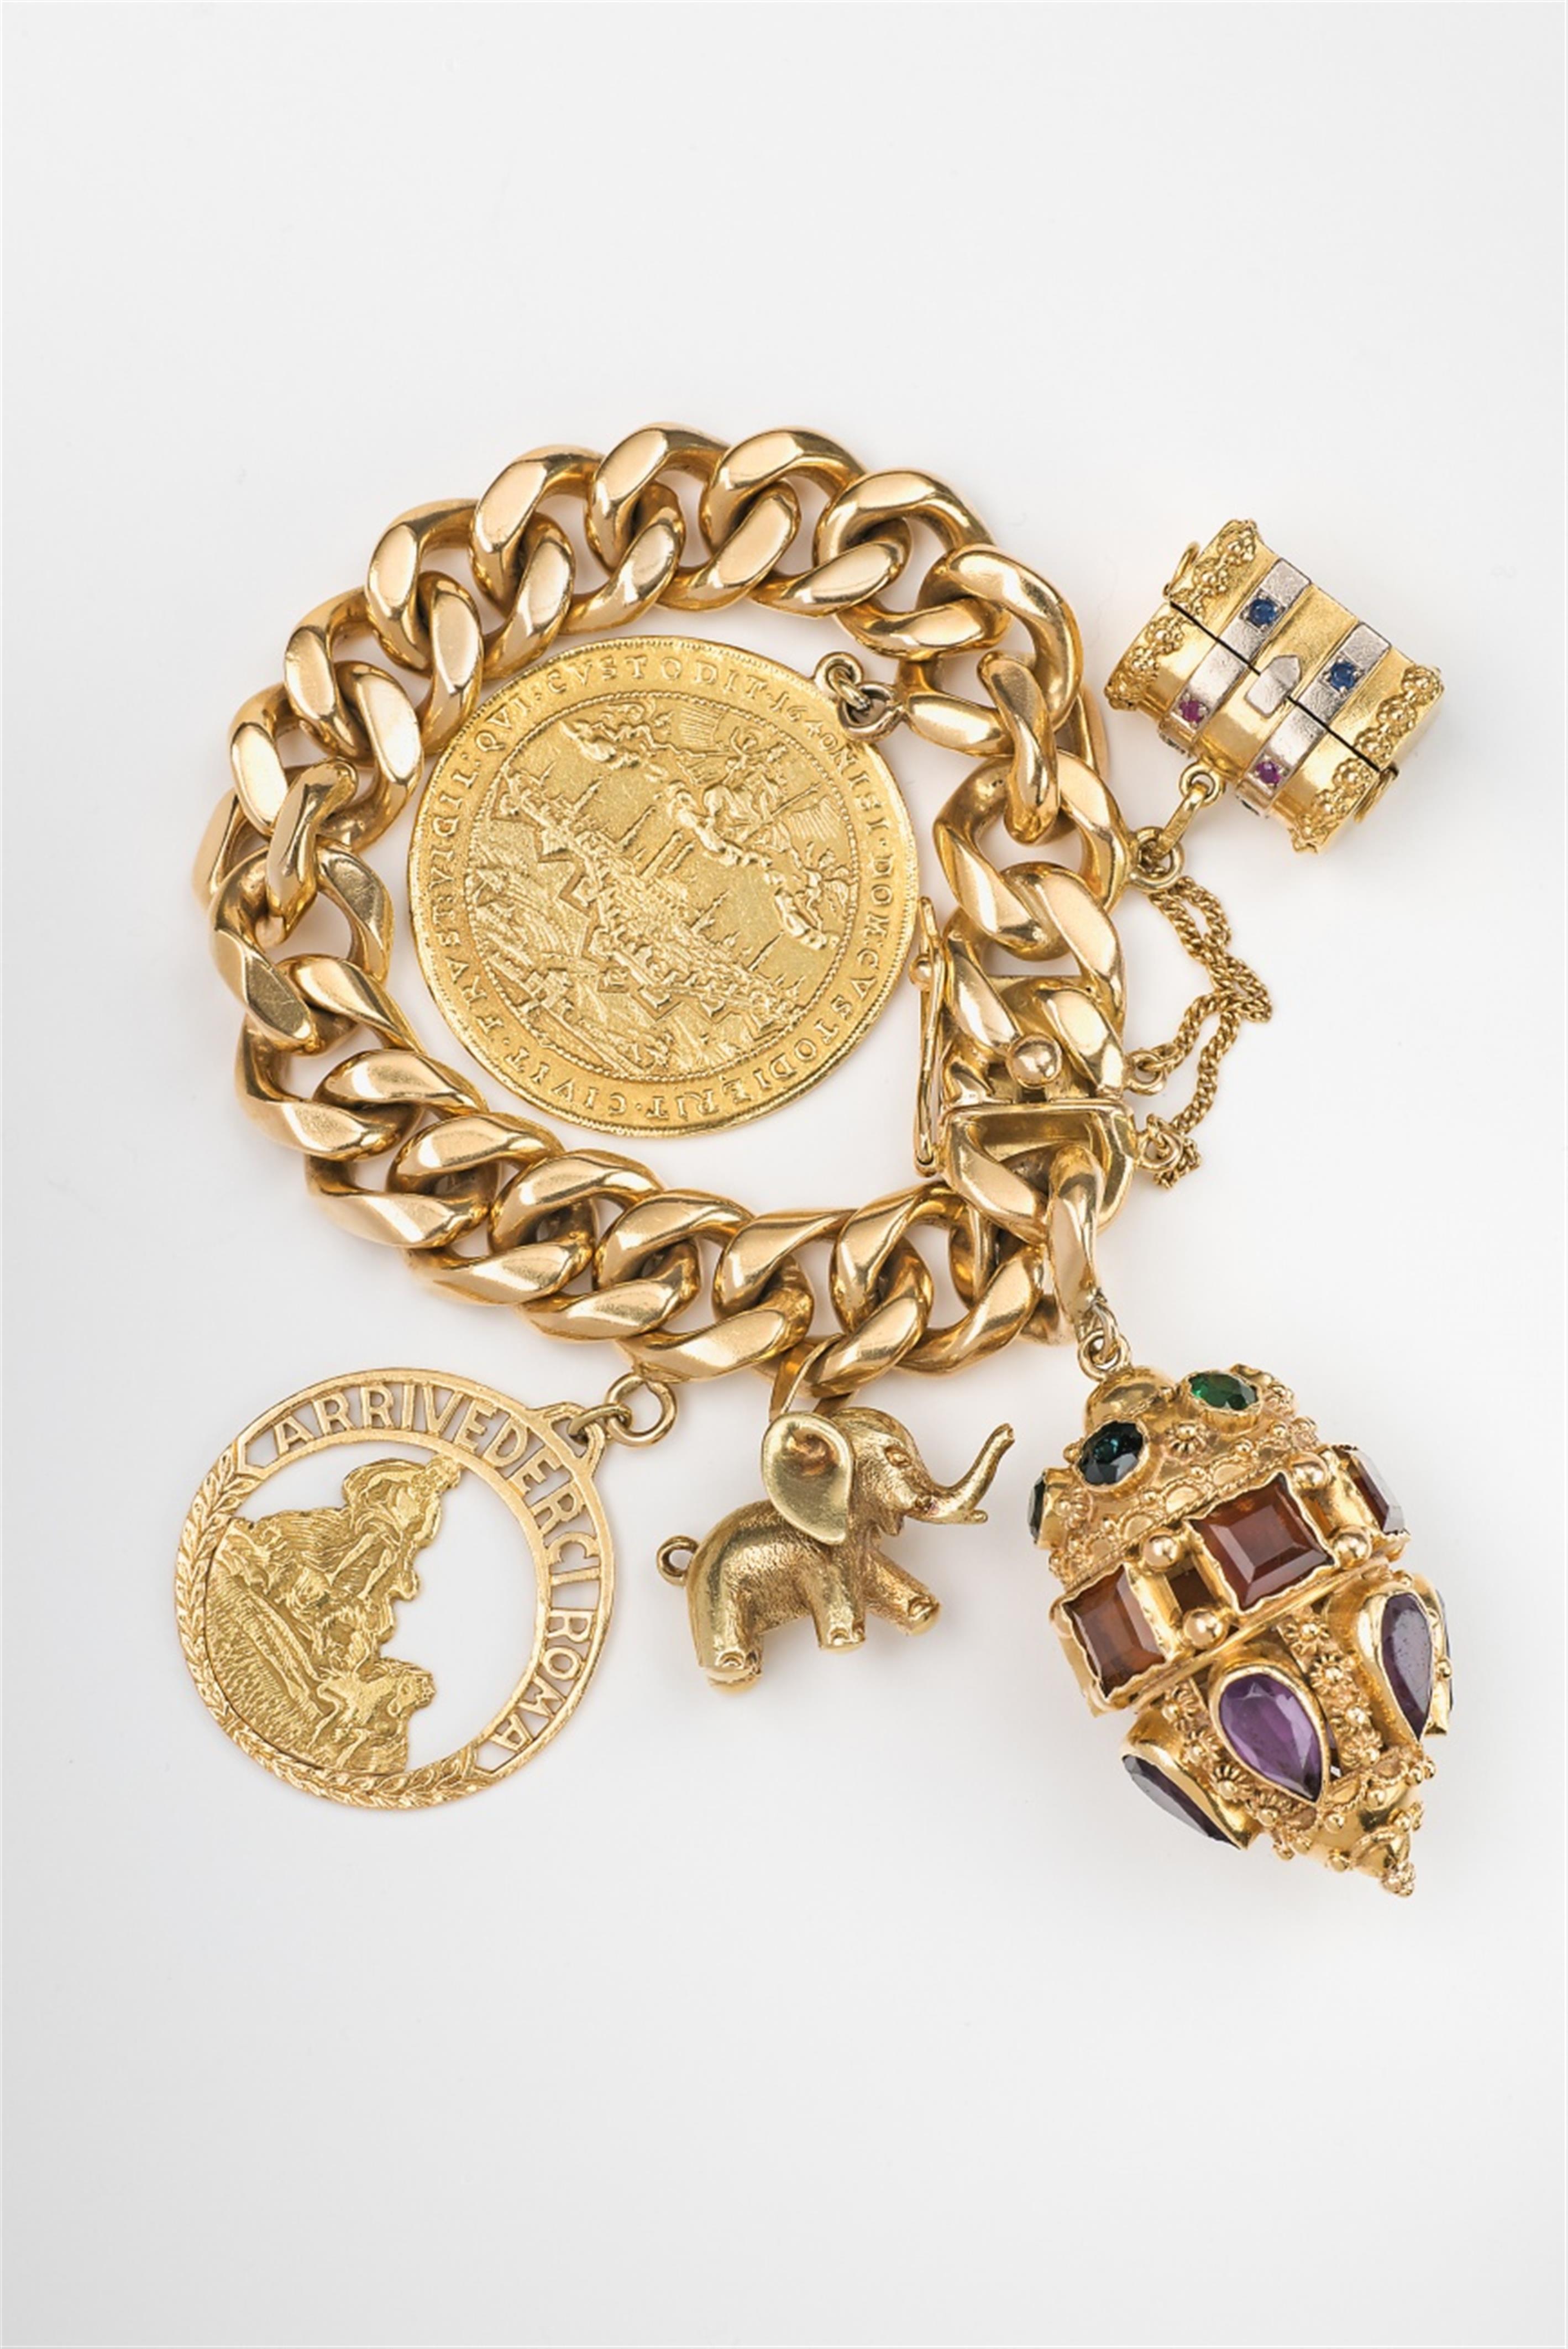 An 18k gold bracelet with souvenir charms - image-1